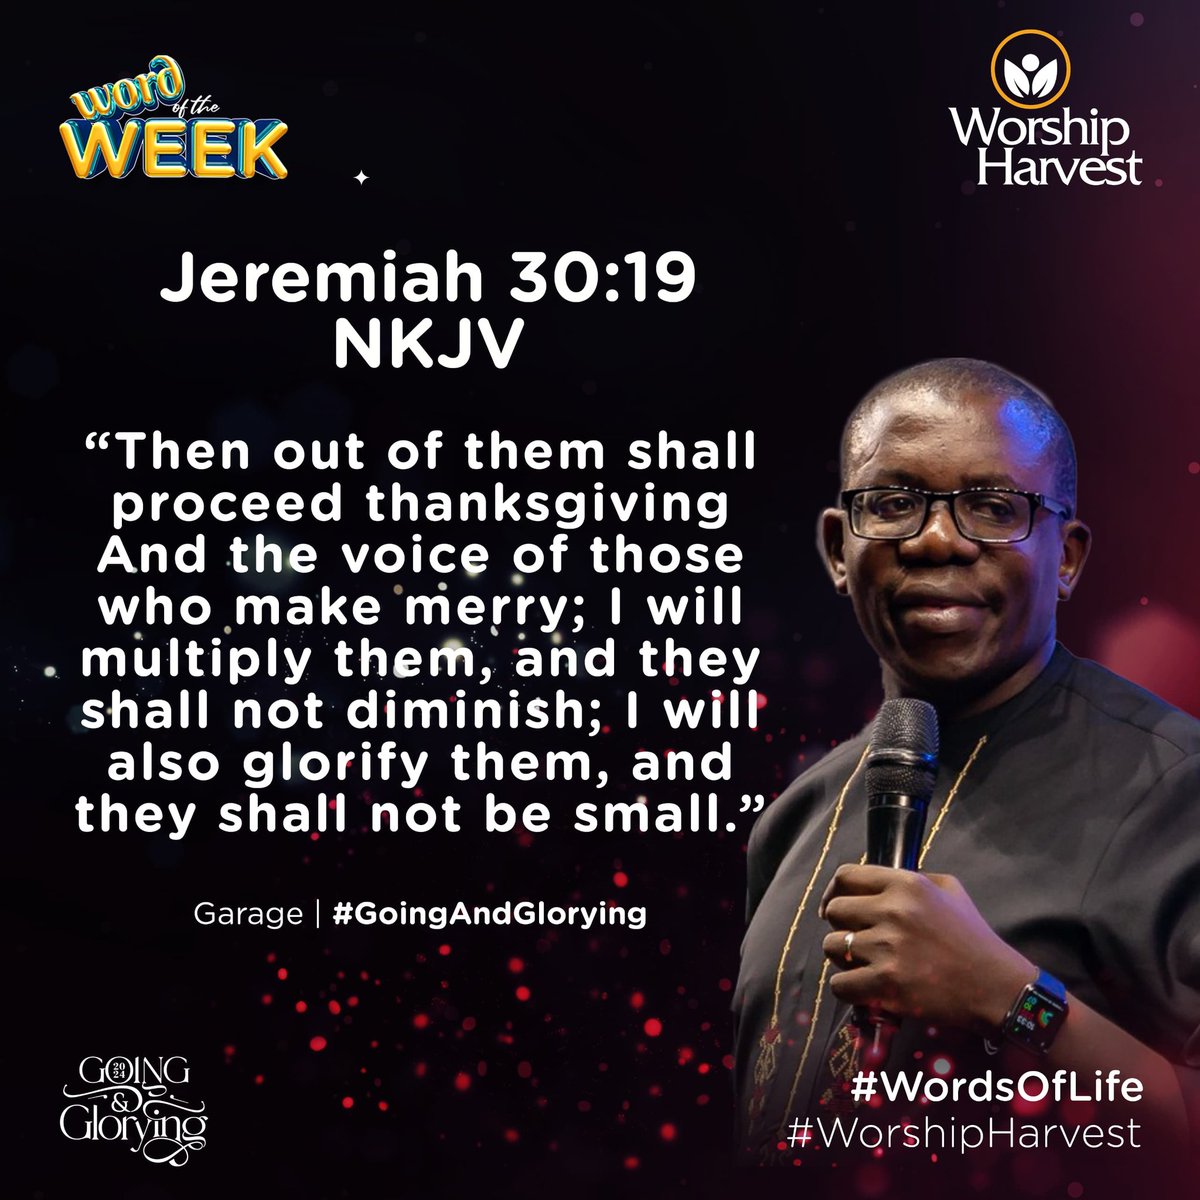 Happy New Week! 😊

#WordOfTheWeek #WordsOfLife #WorshipHarvest #GoingAngGlorying